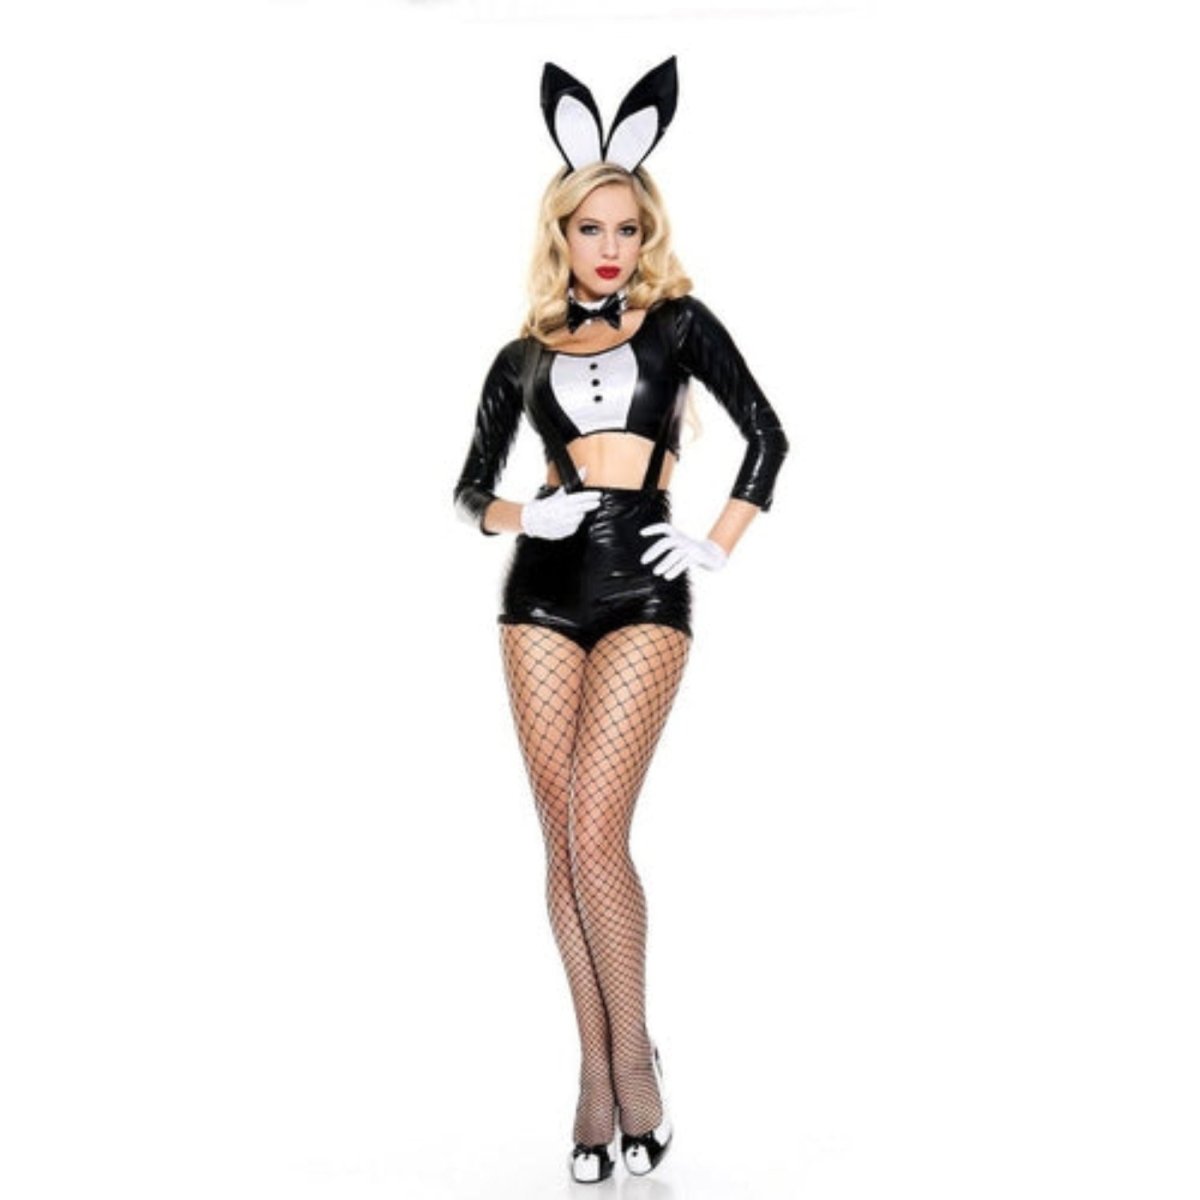 Sinful Bunny Ladies Costume - worldclasscostumes